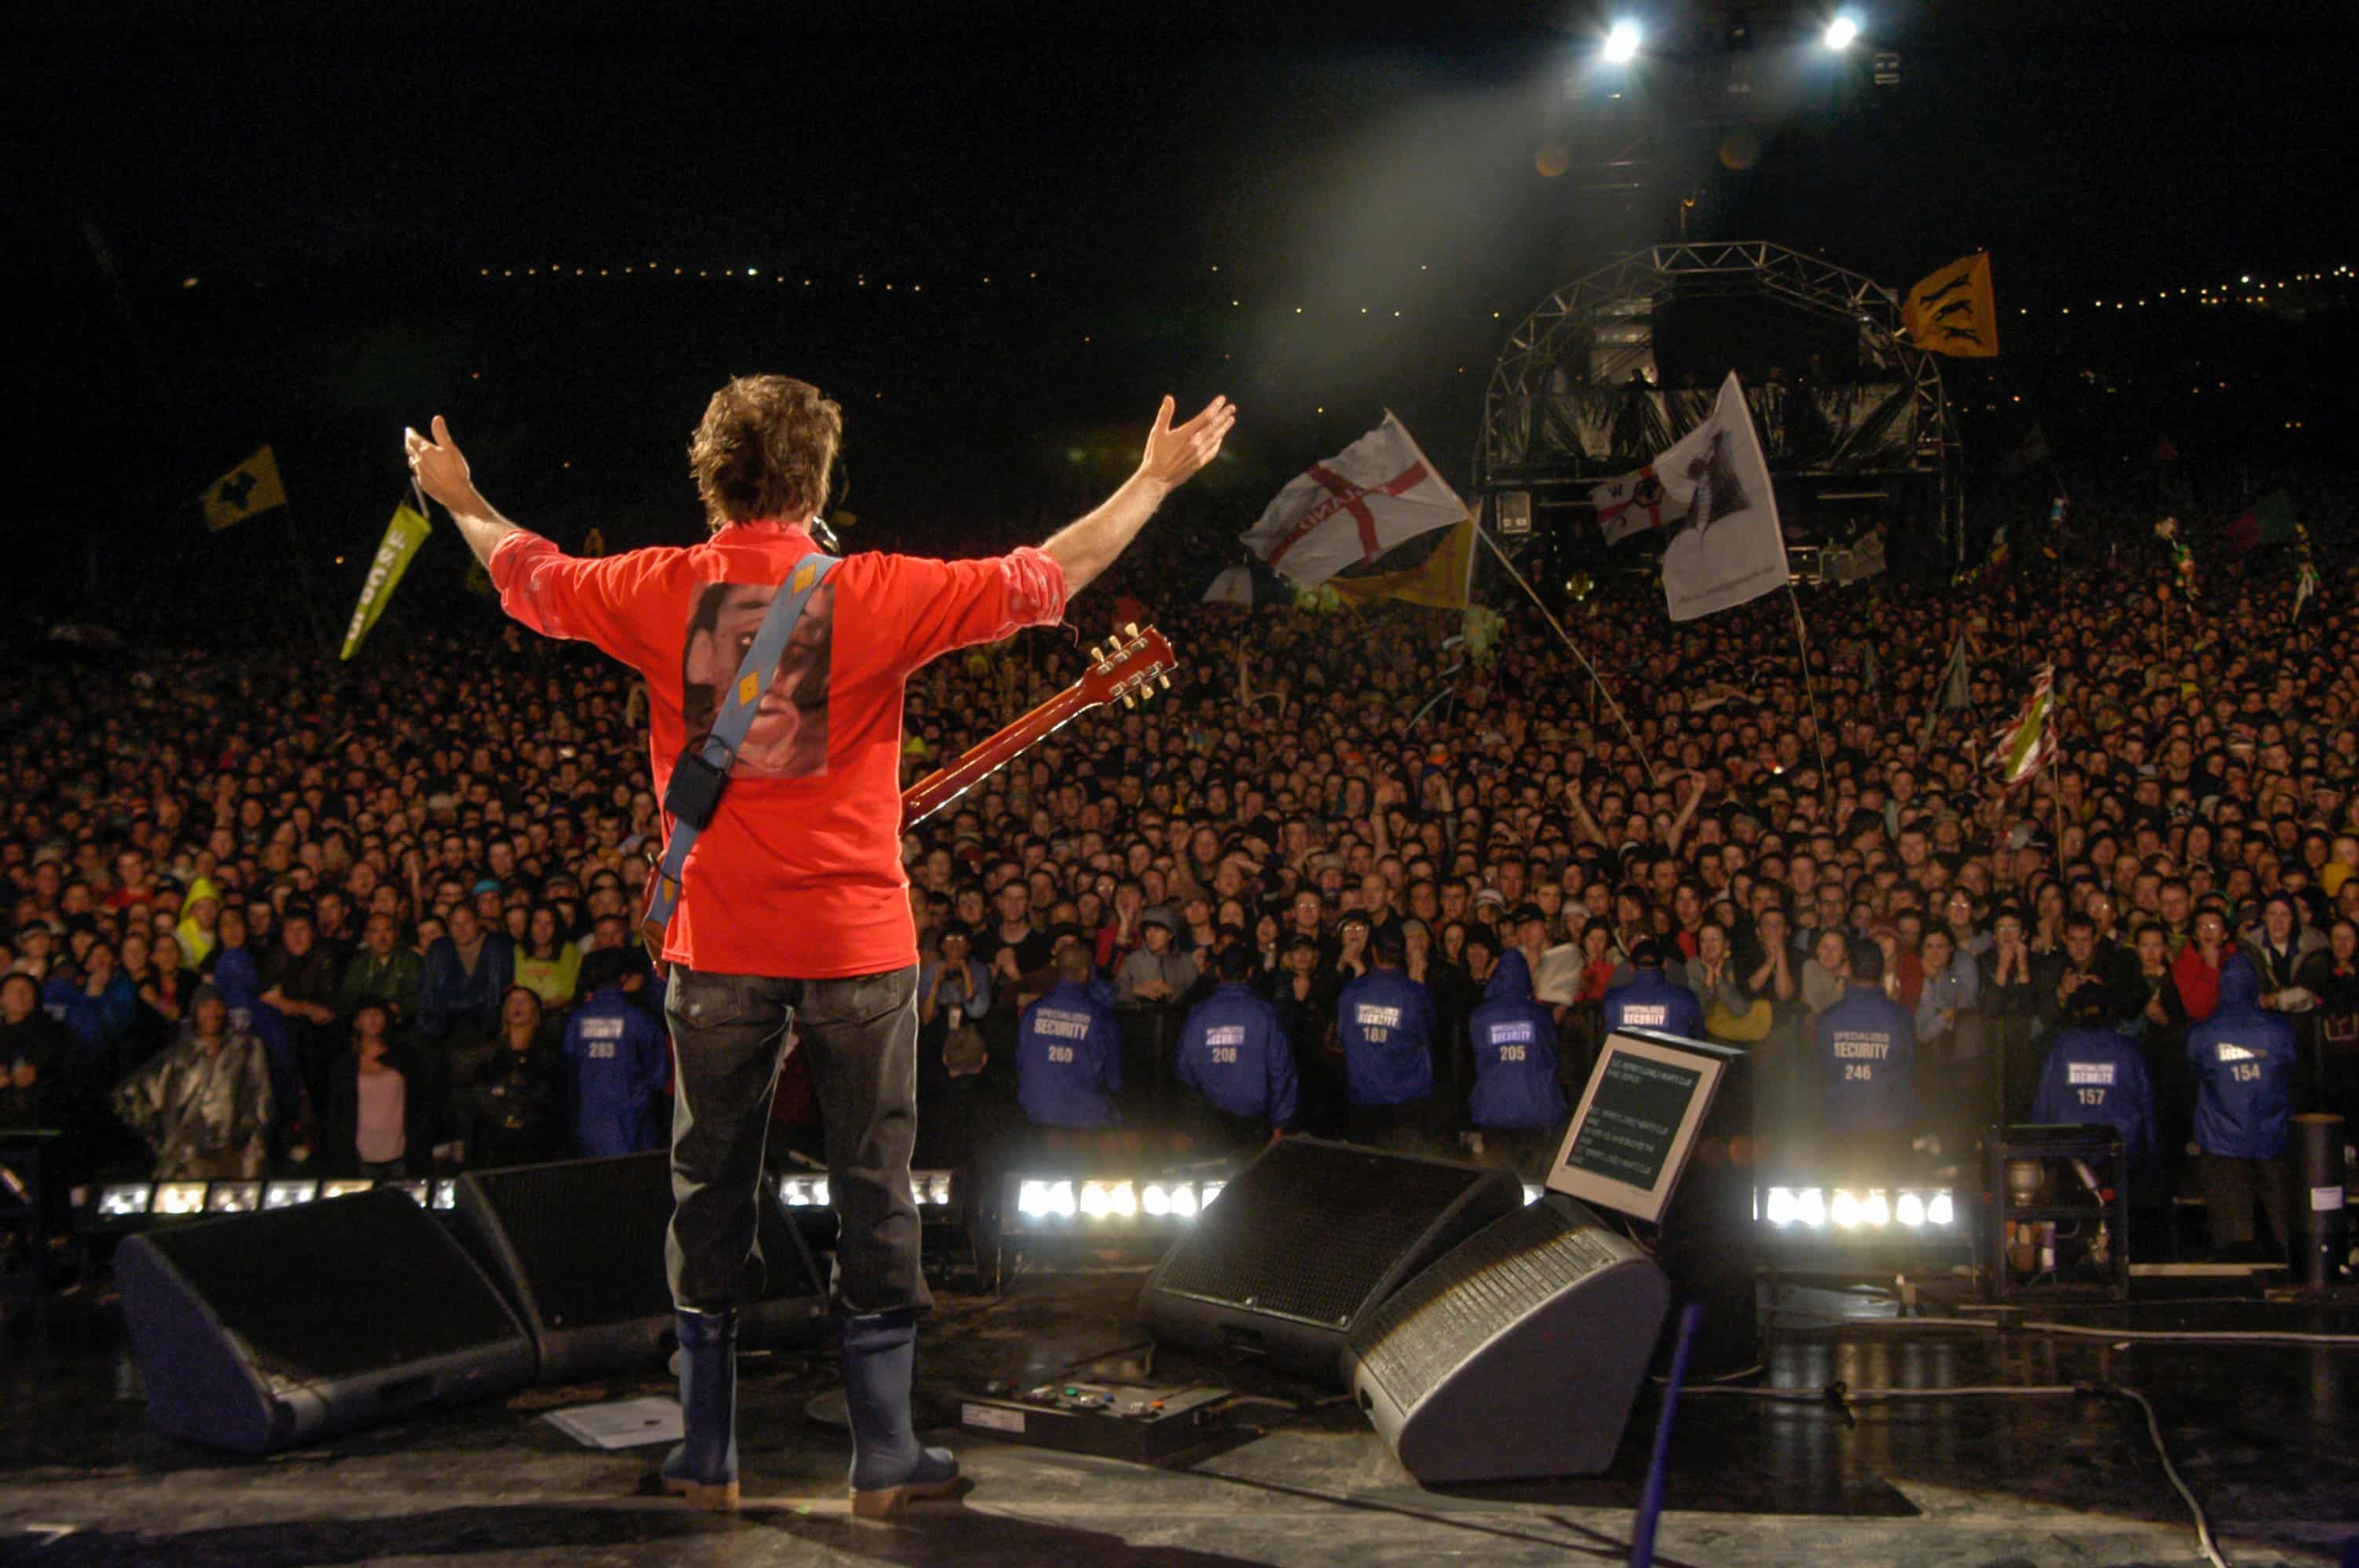 Photo of Paul performing at Glastonbury in 2004